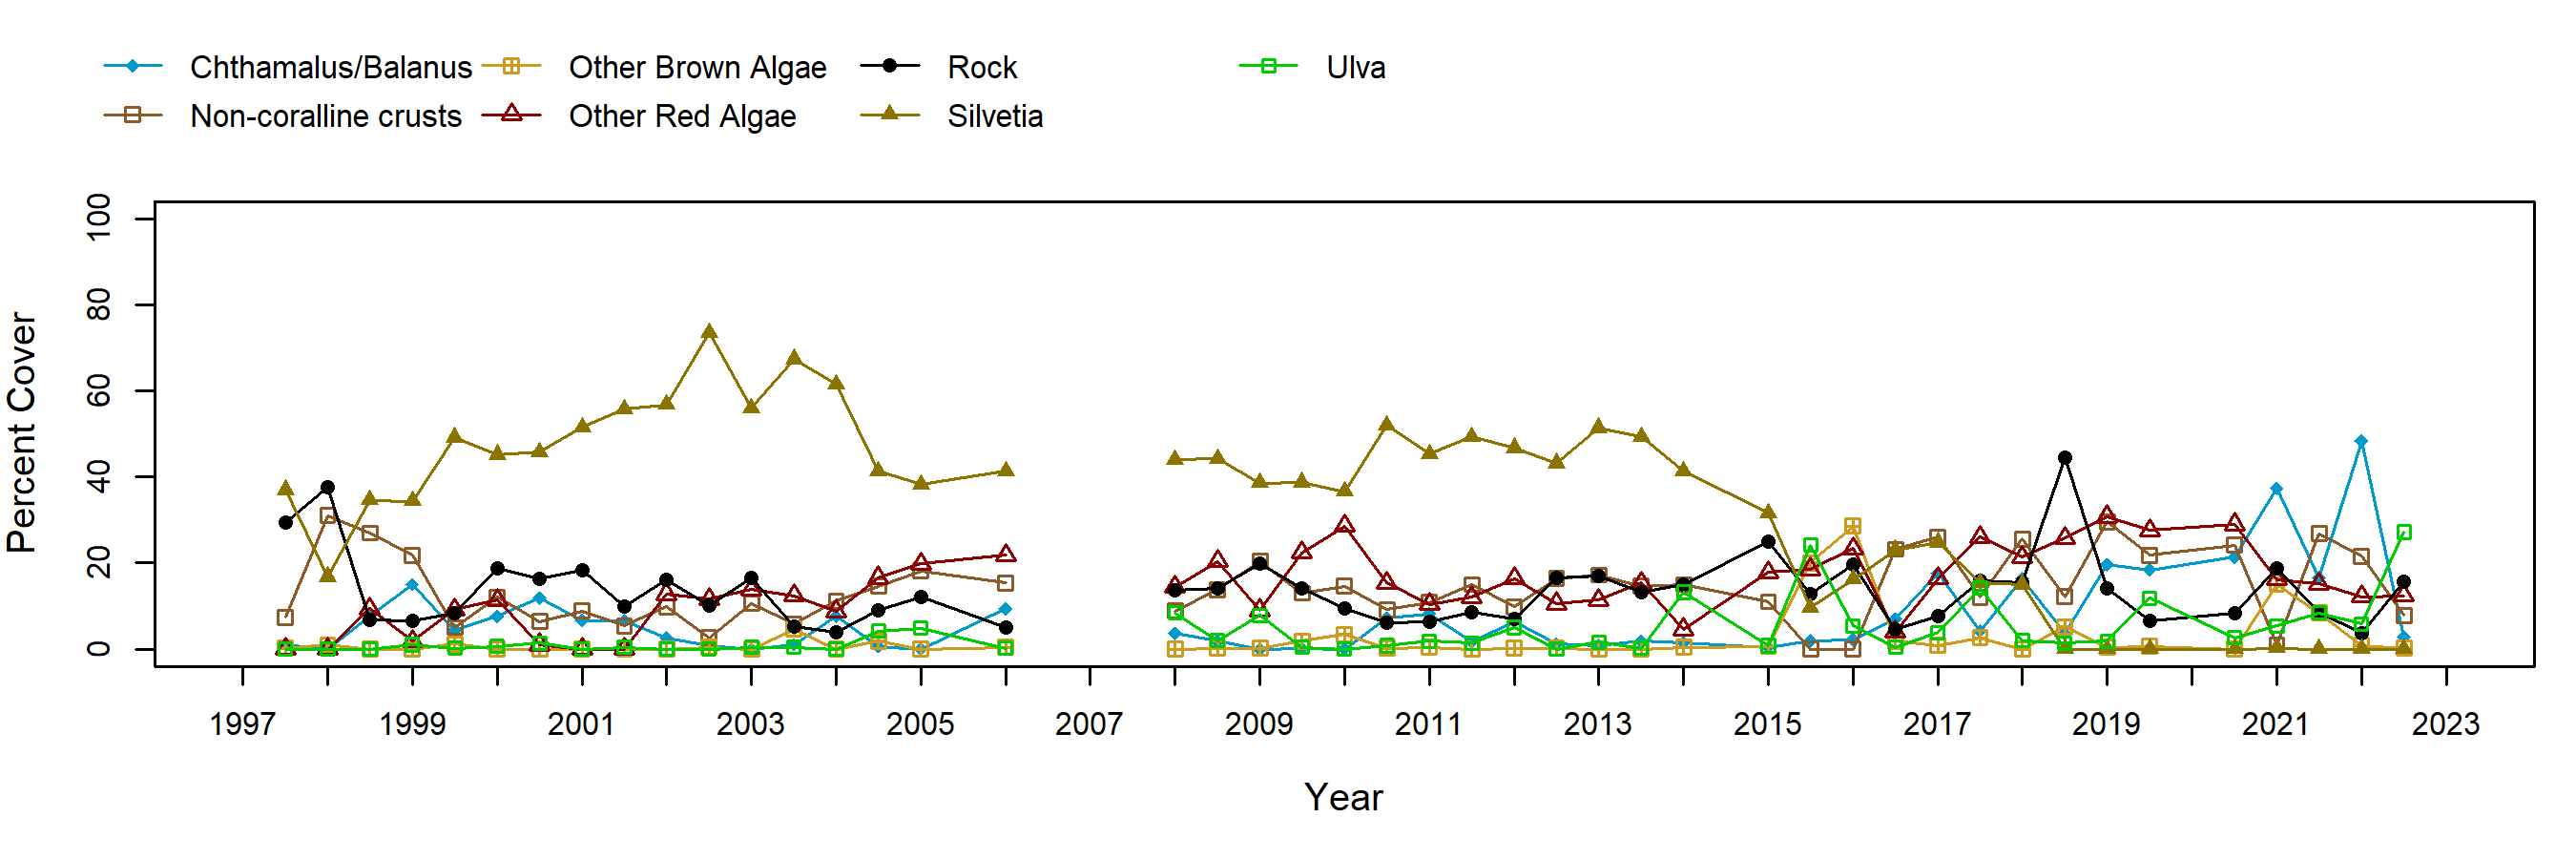 Scripps Reef Silvetia trend plot